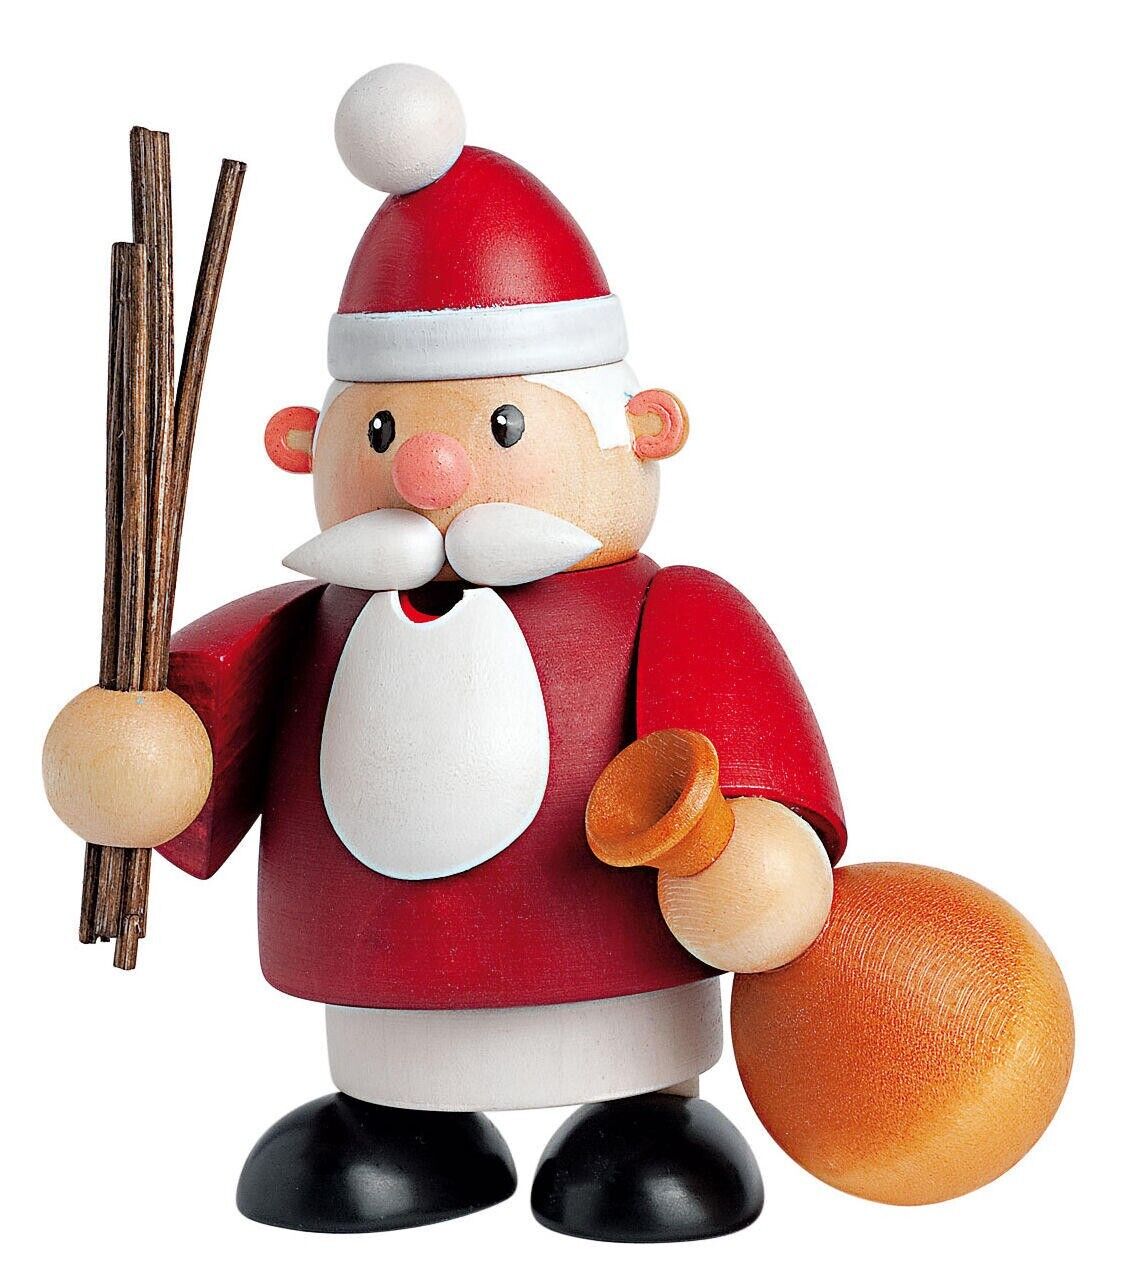 NEW IN BOX- KWO Little Fellow Santa Claus - German Smoker / Incense Burner